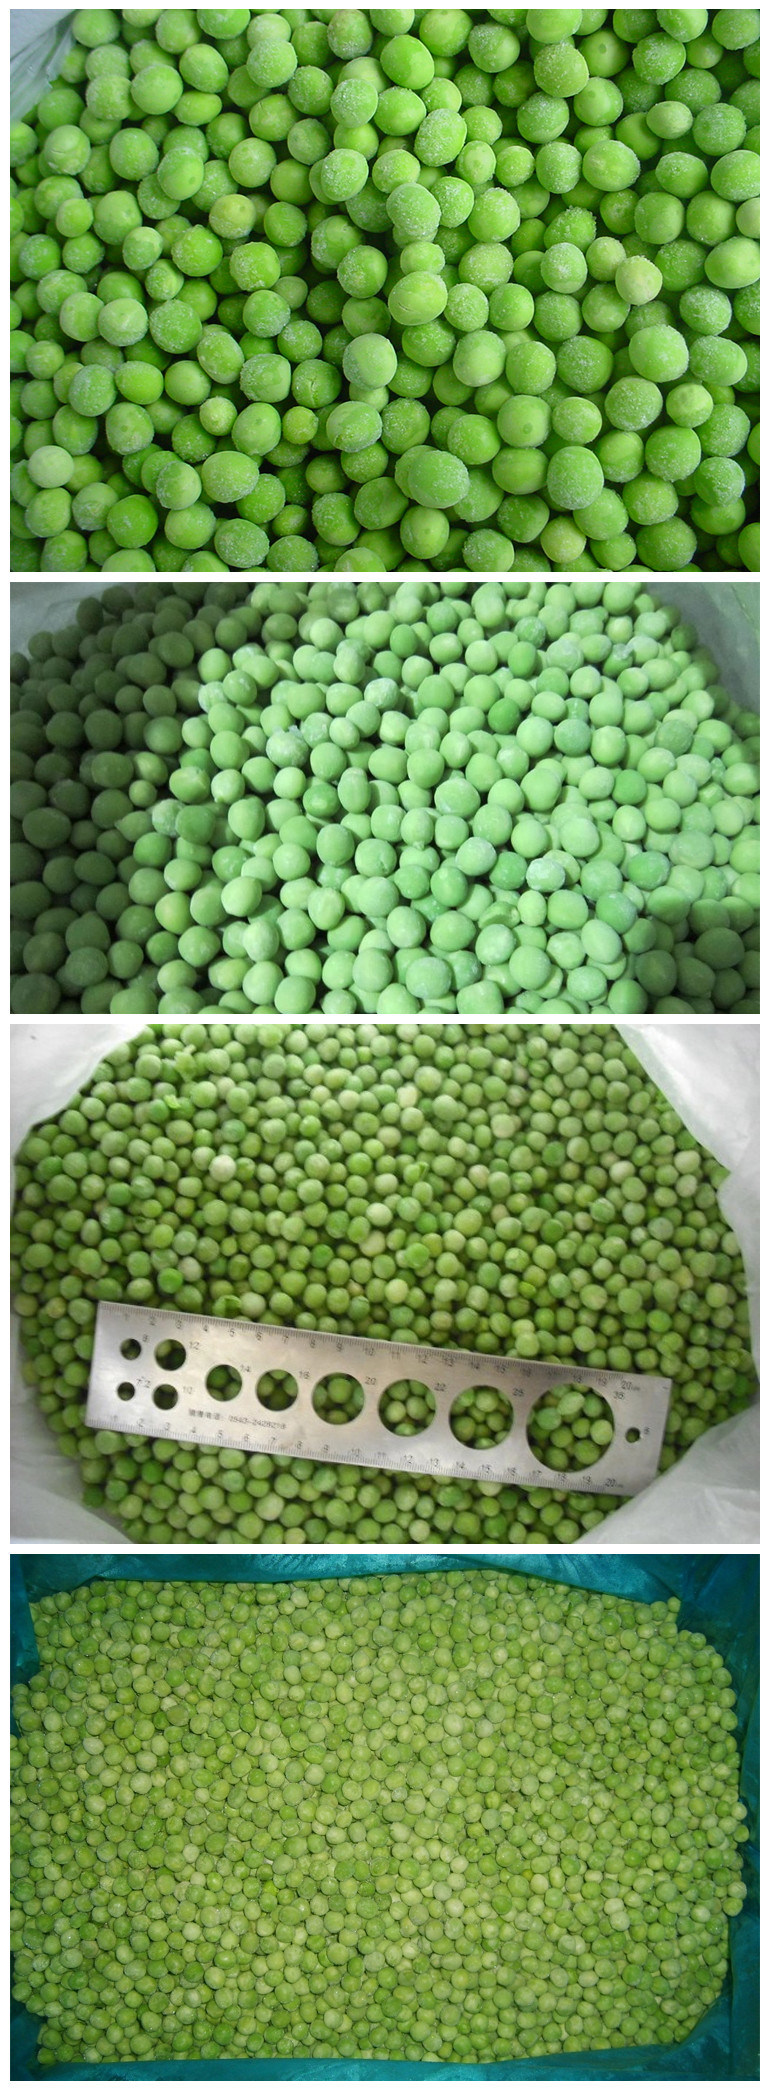 Frozen Peeled Edamame Frozen Shelled Edamame Beans Frozen Green Soybean